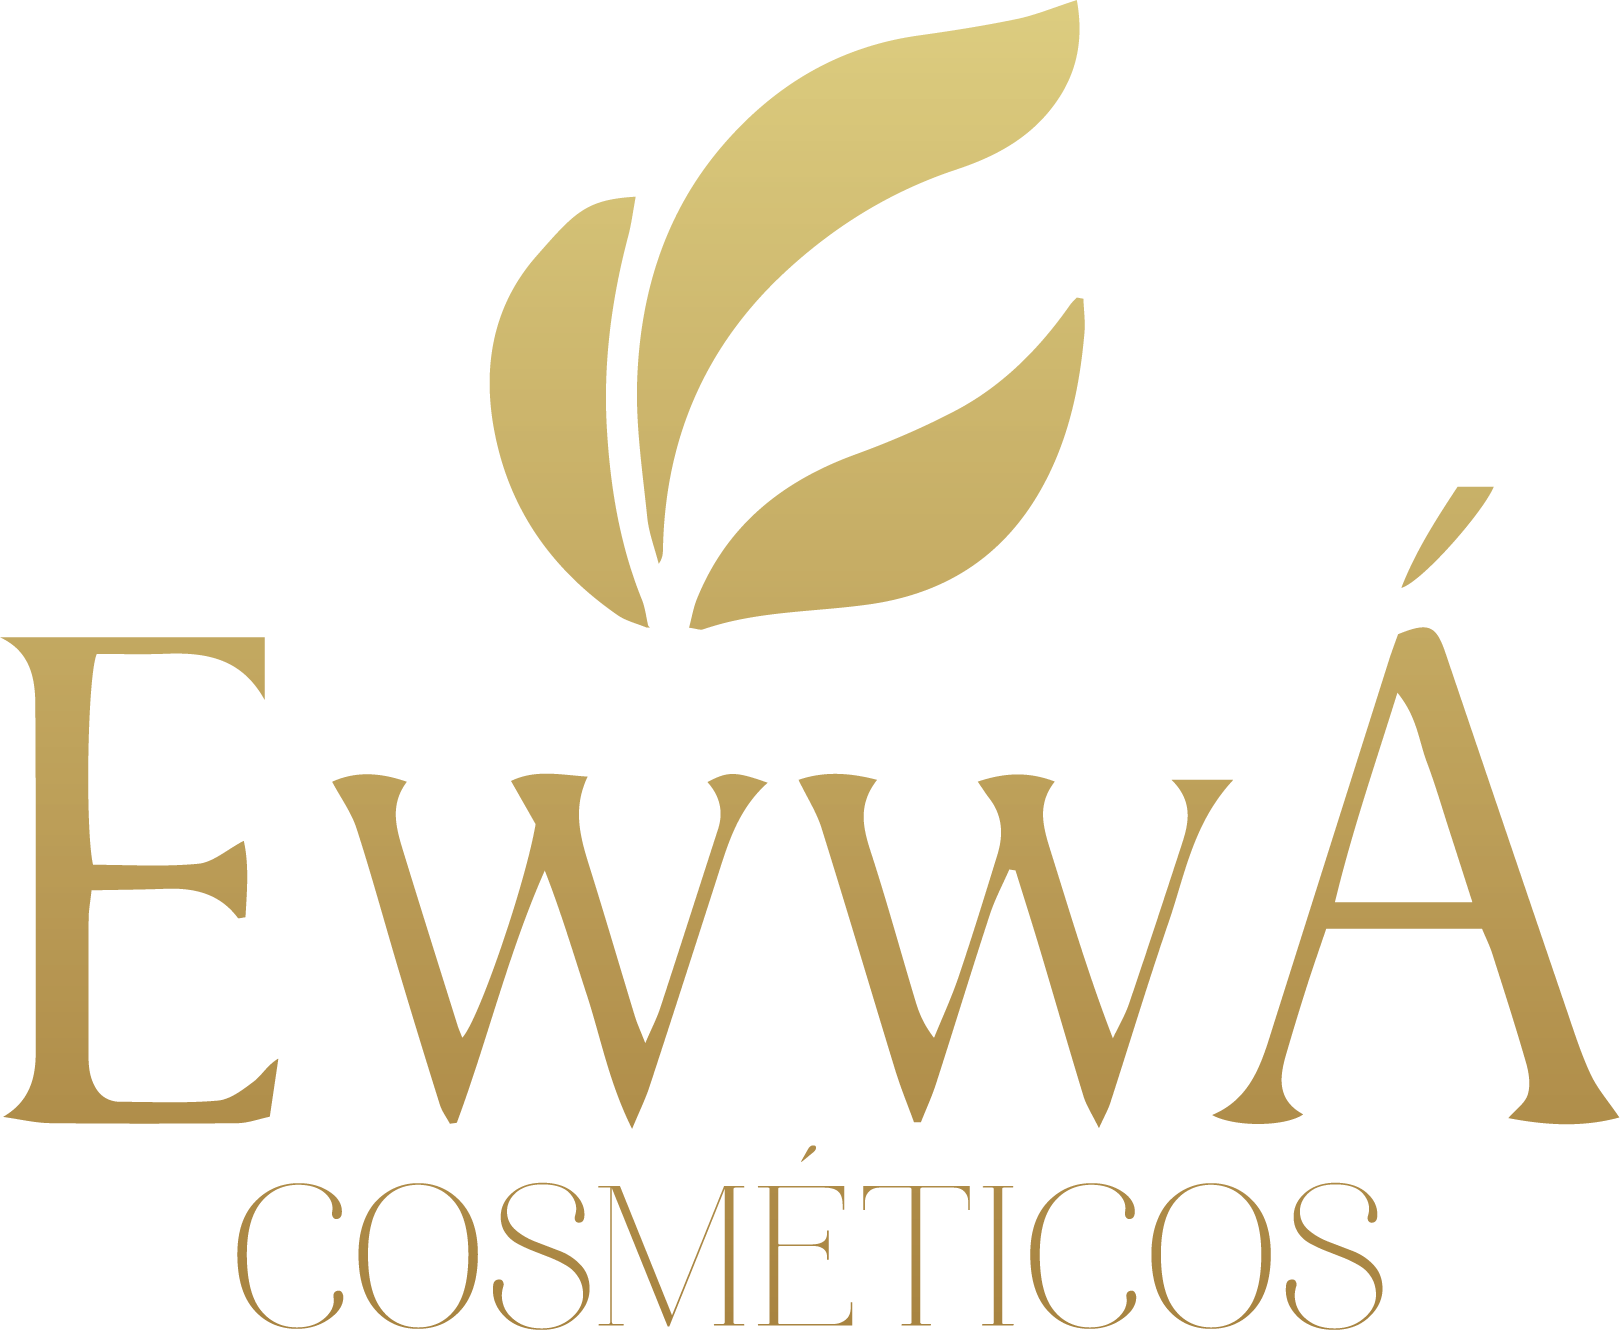 EWWA COSMETICOS